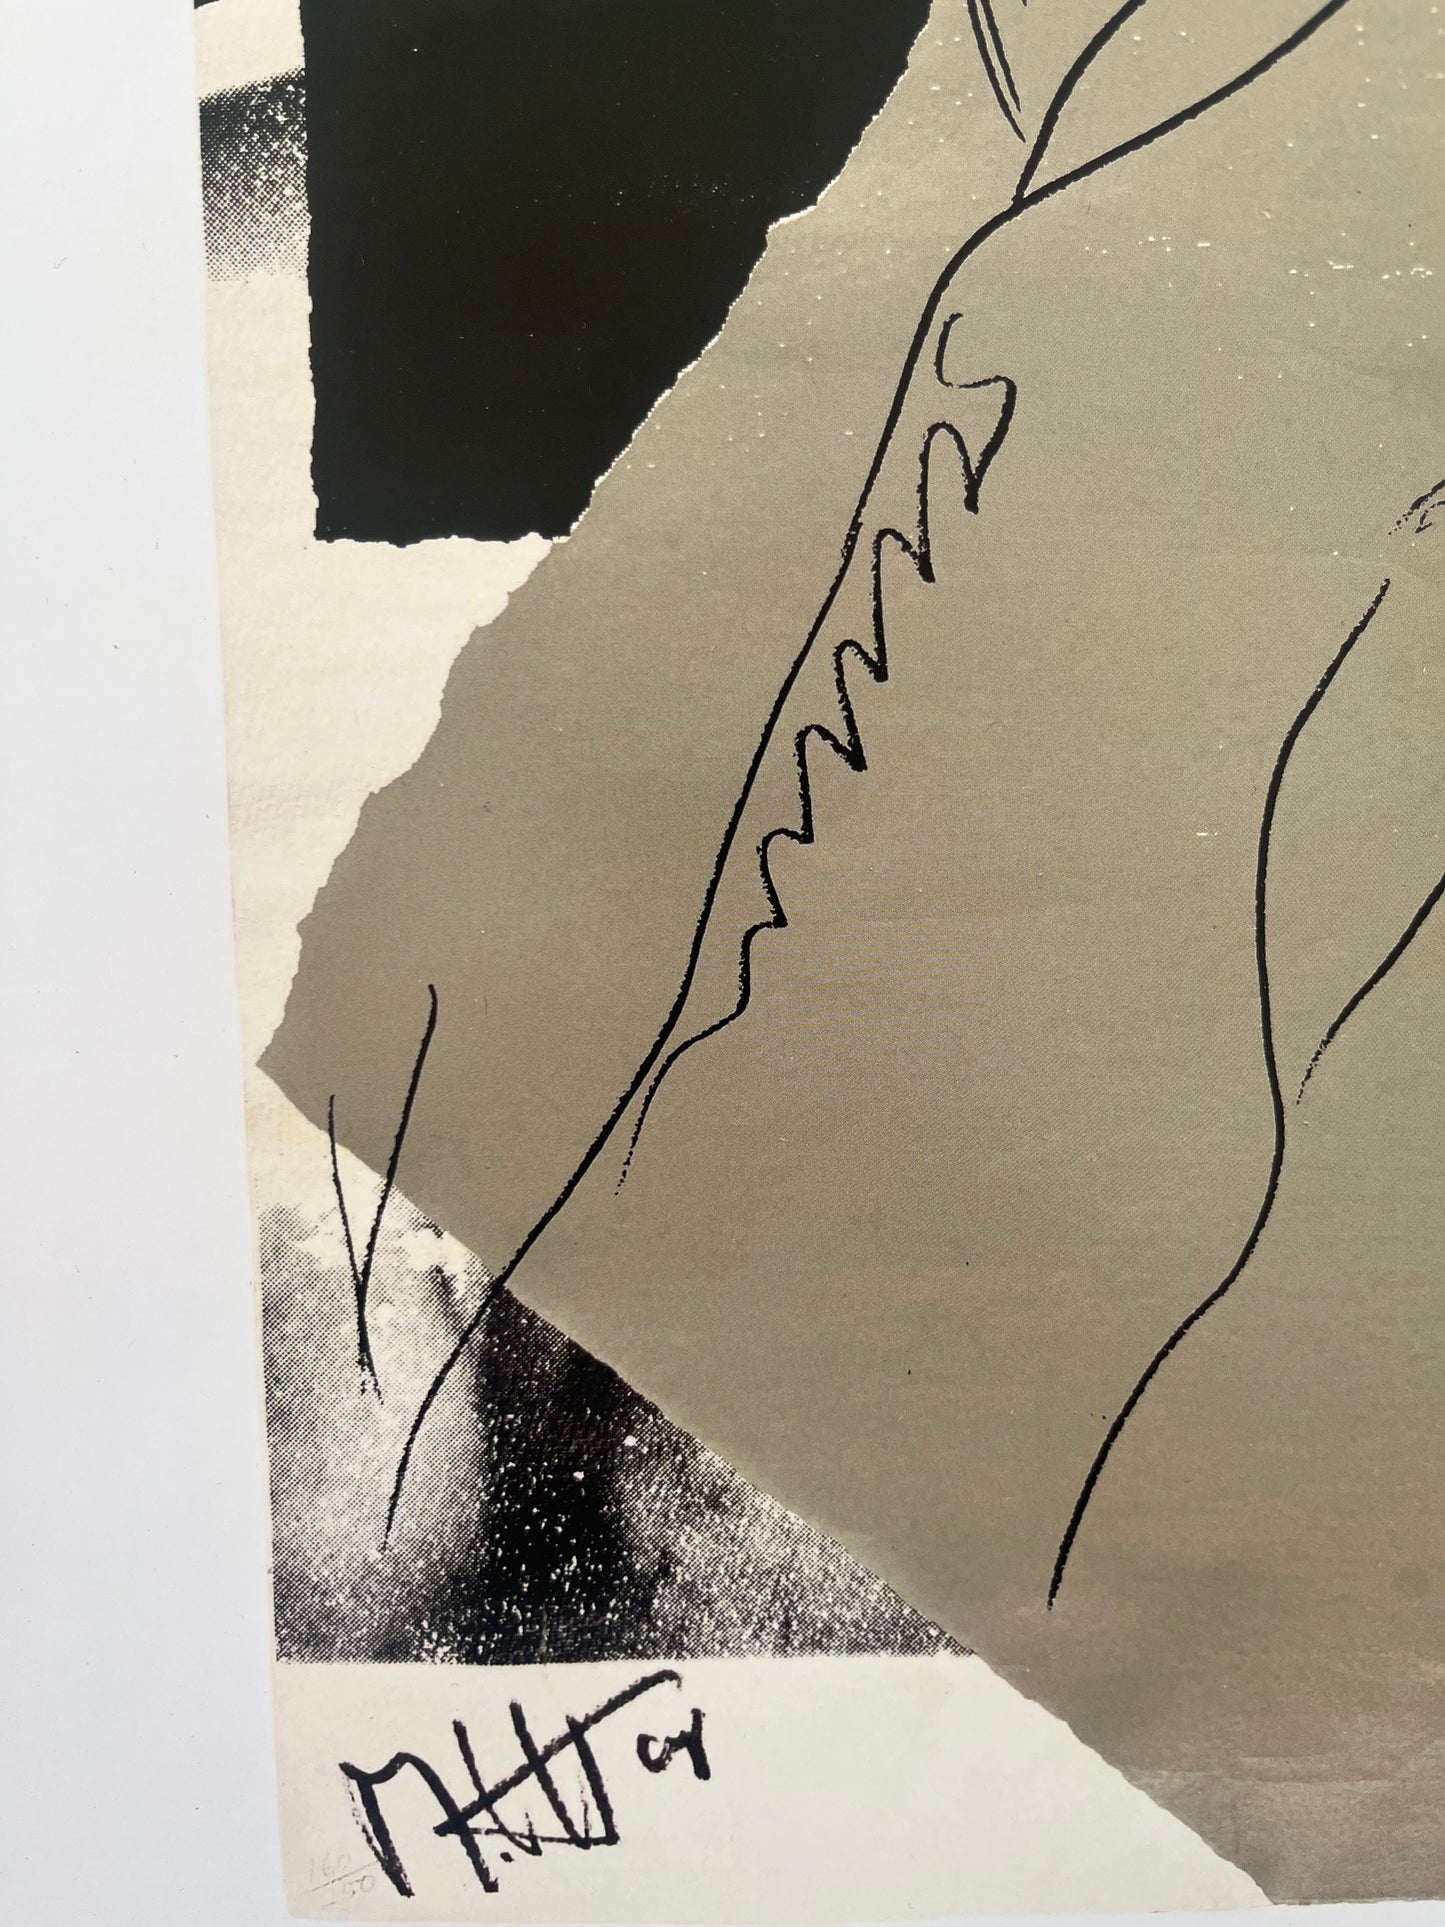 Serigrafia offset - Andy Warhol x MocoMuseum - Mick Jagger, 1975